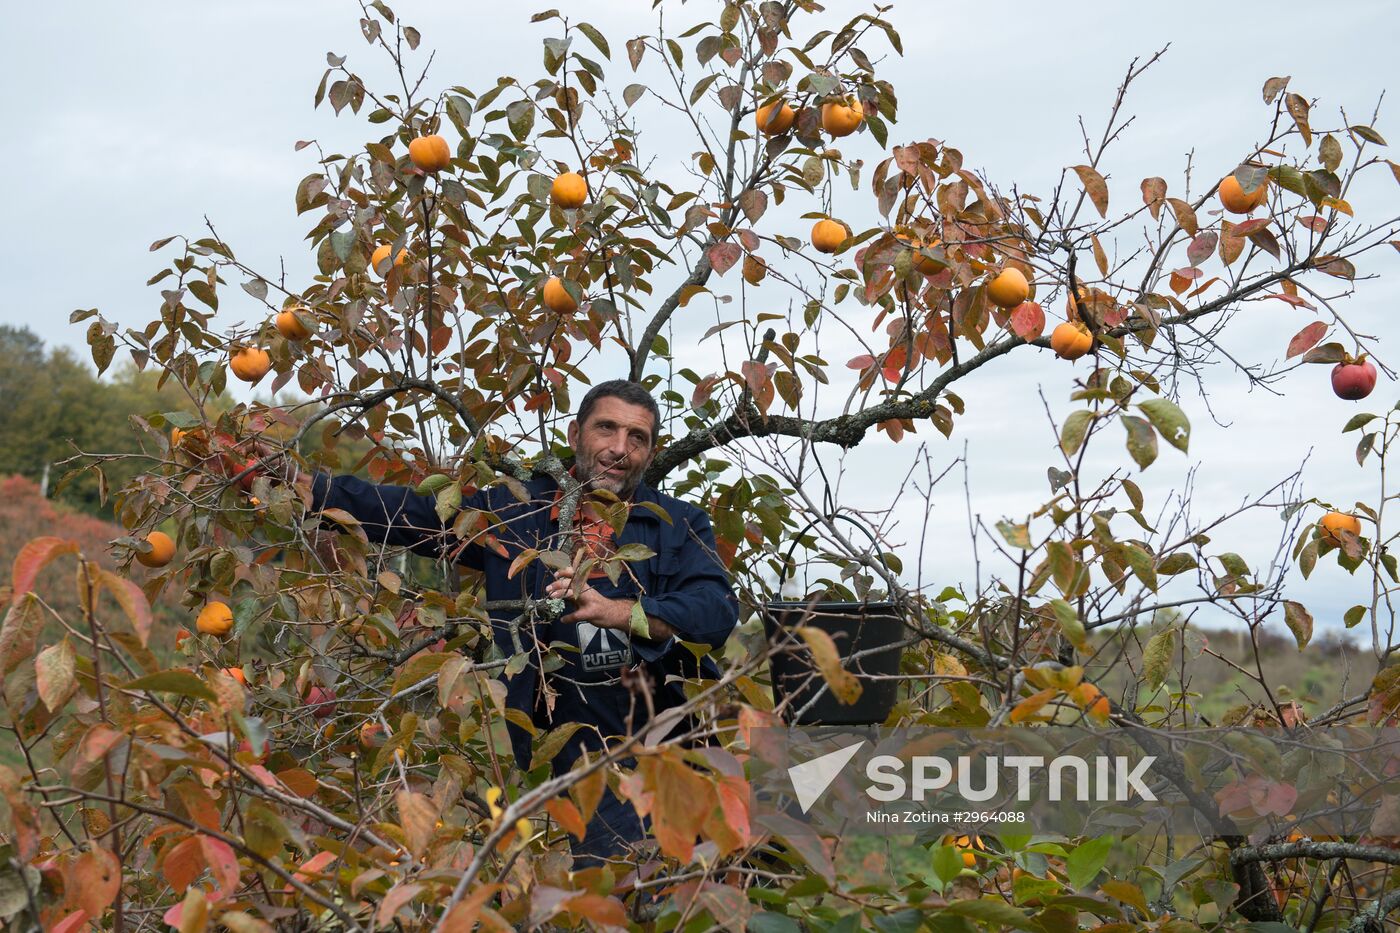 Harvesting persimmon in Sochi